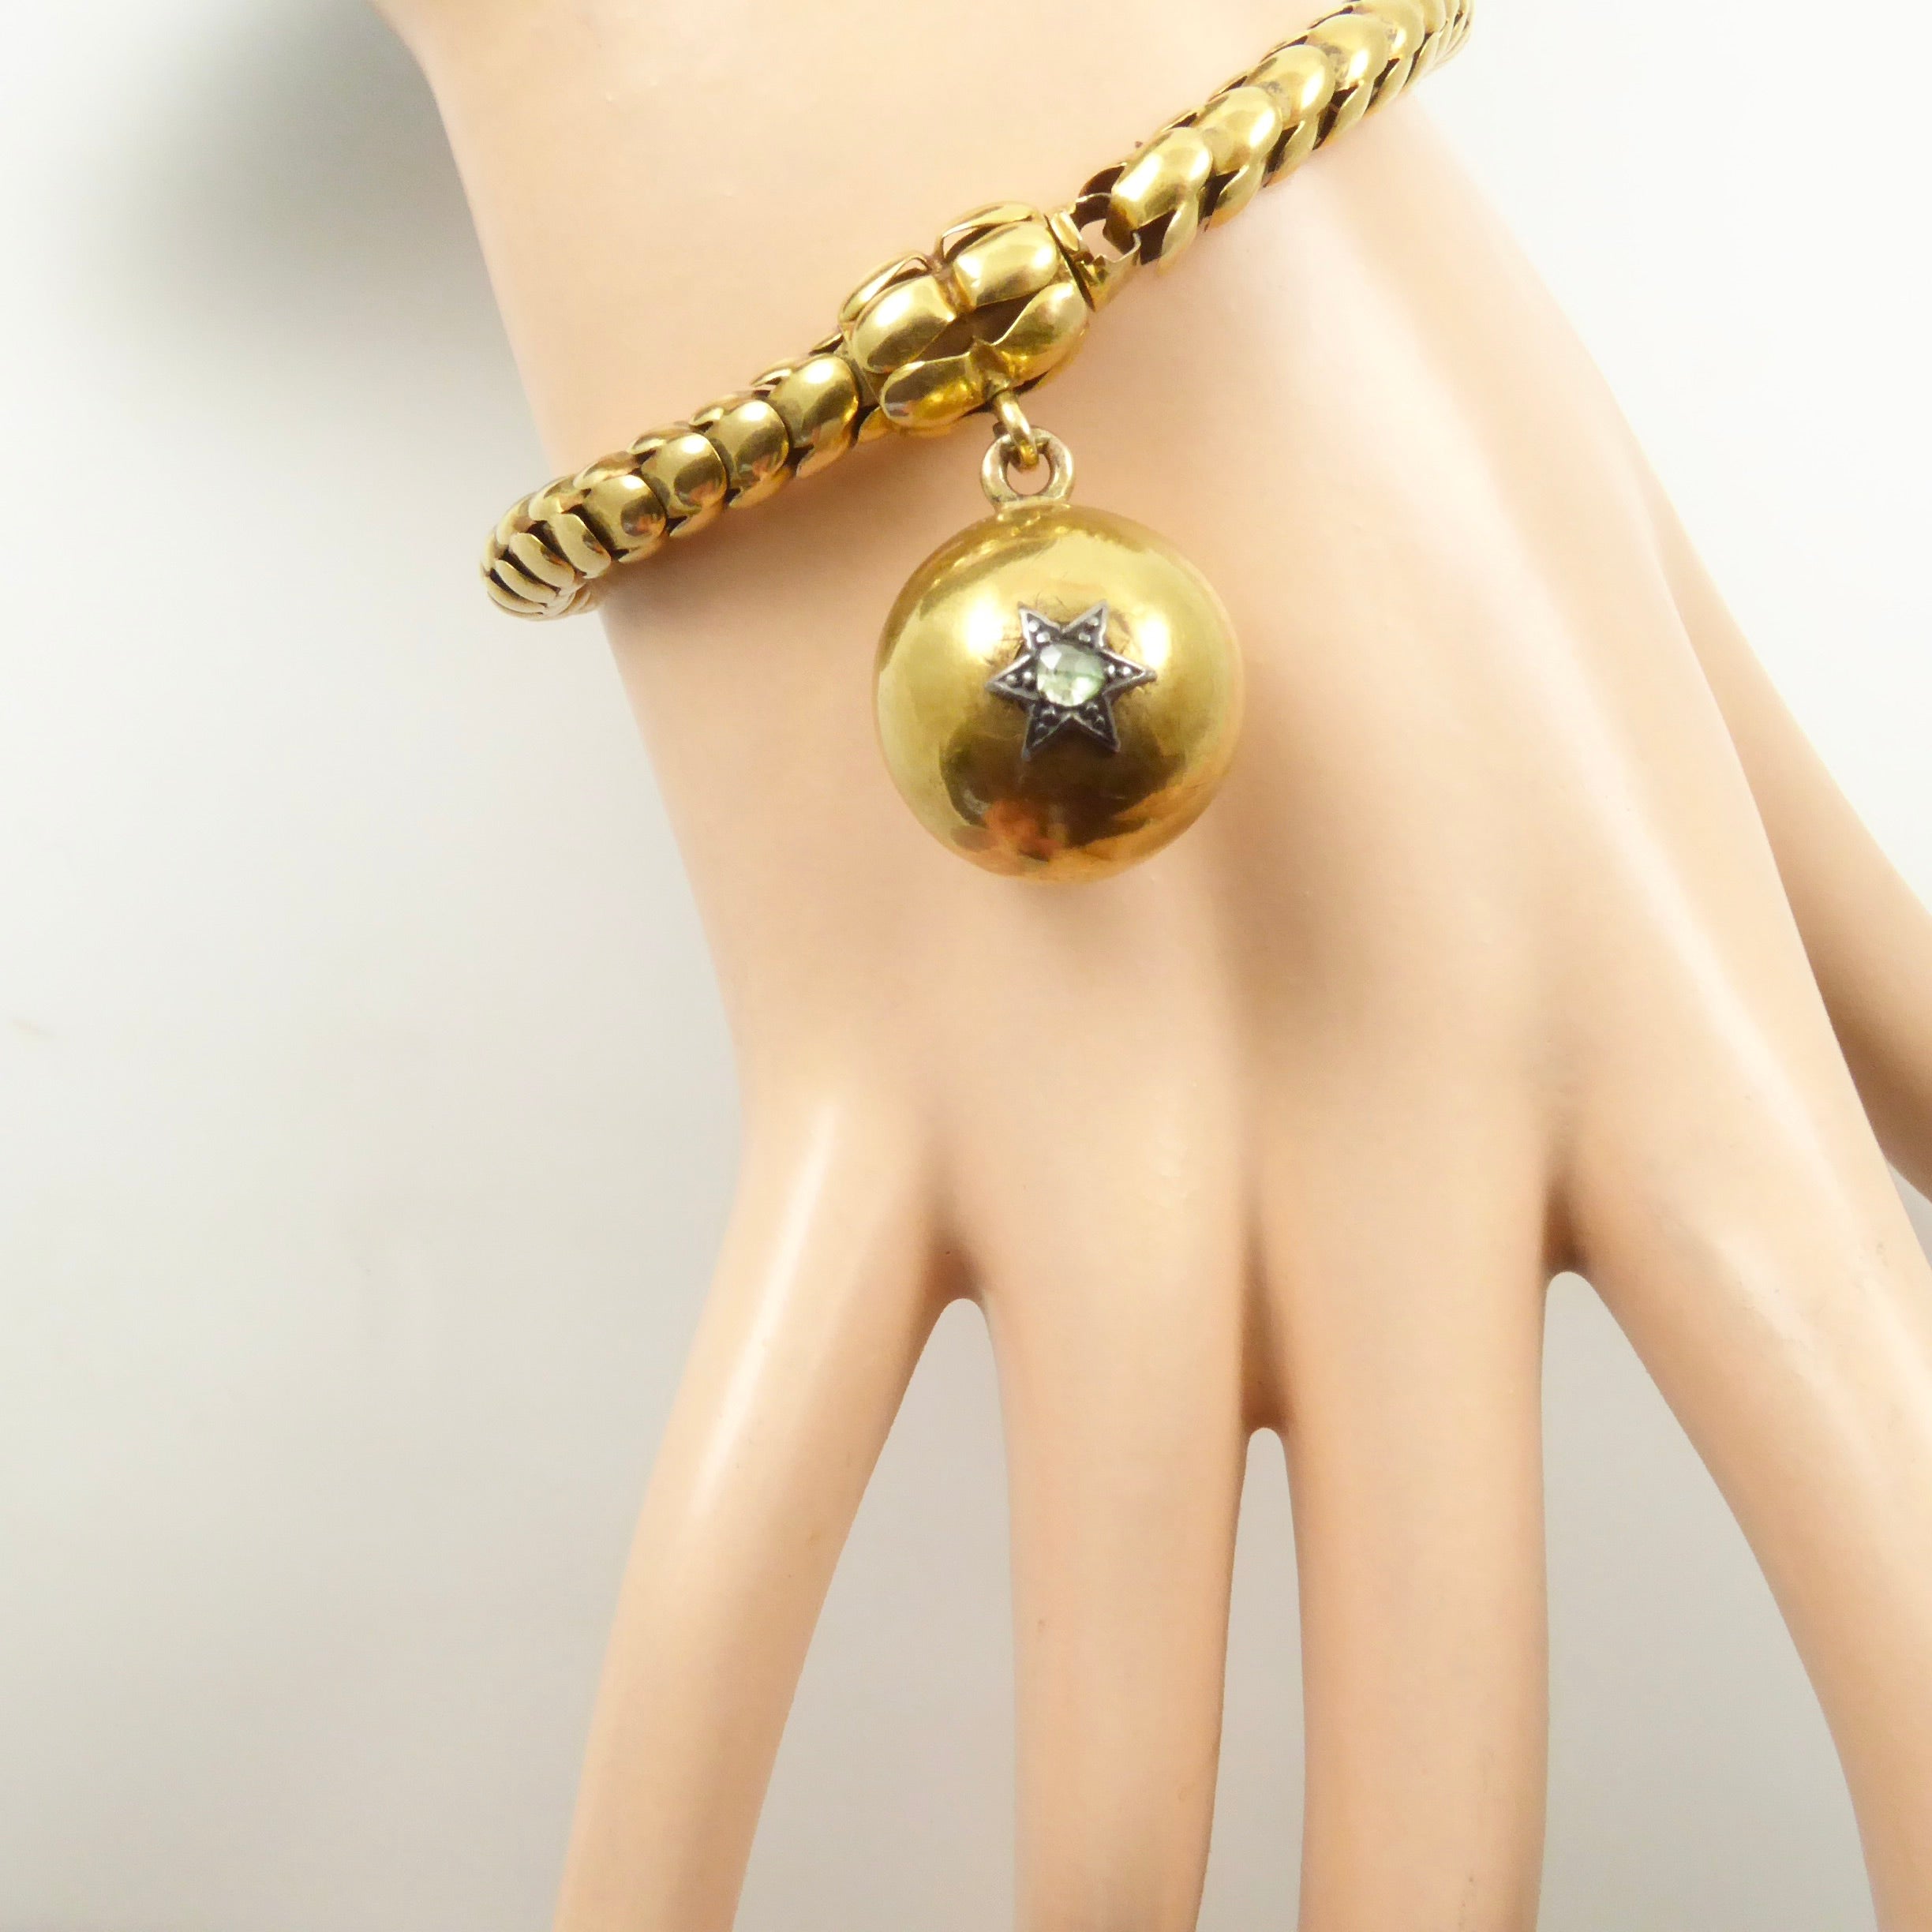 Victorian gold snake chain bracelet locket